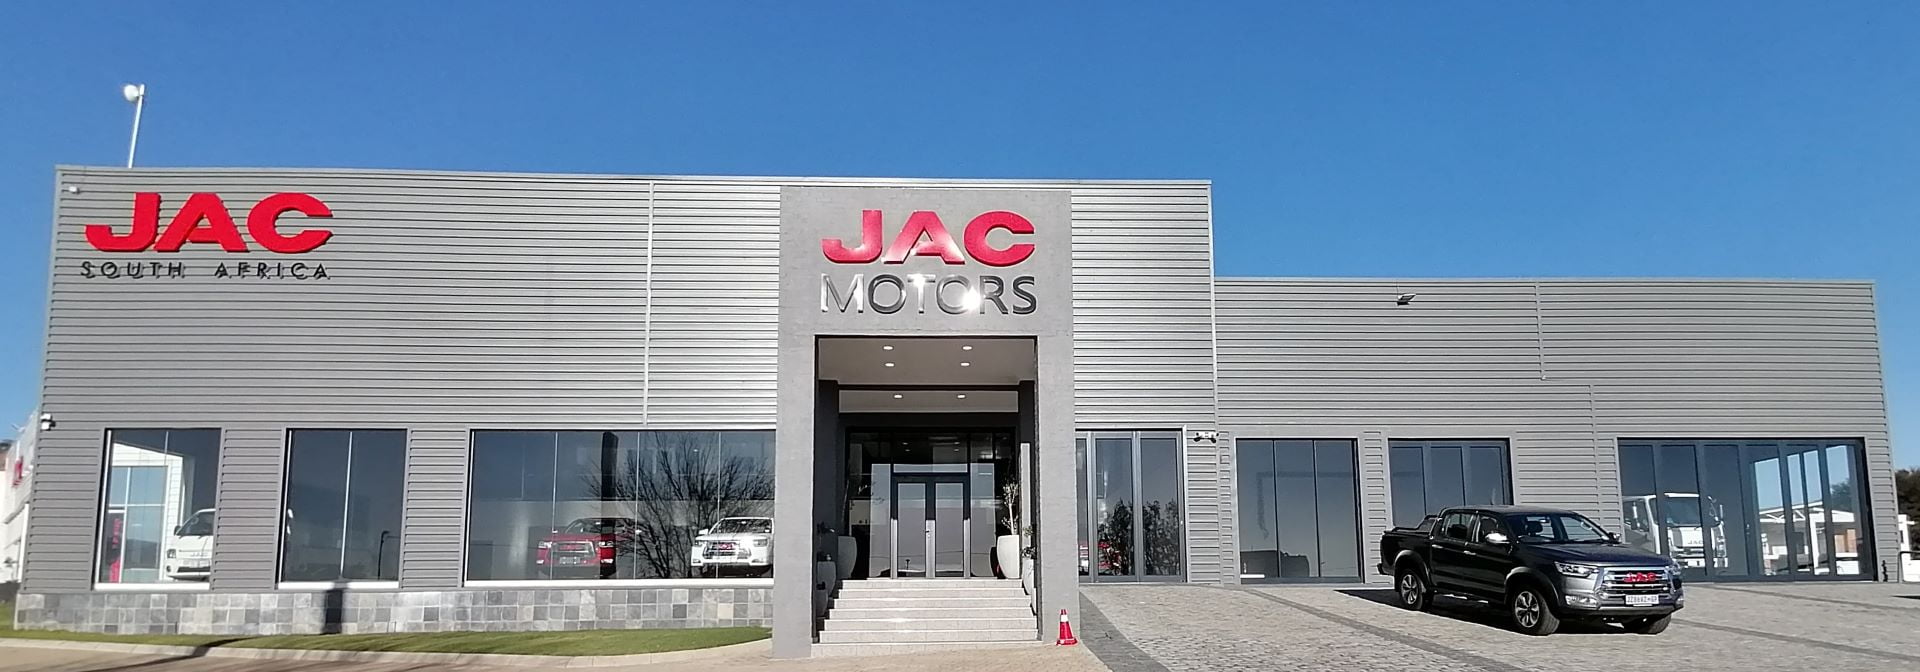 JAC Motors Enhances Warranties and Service Plans